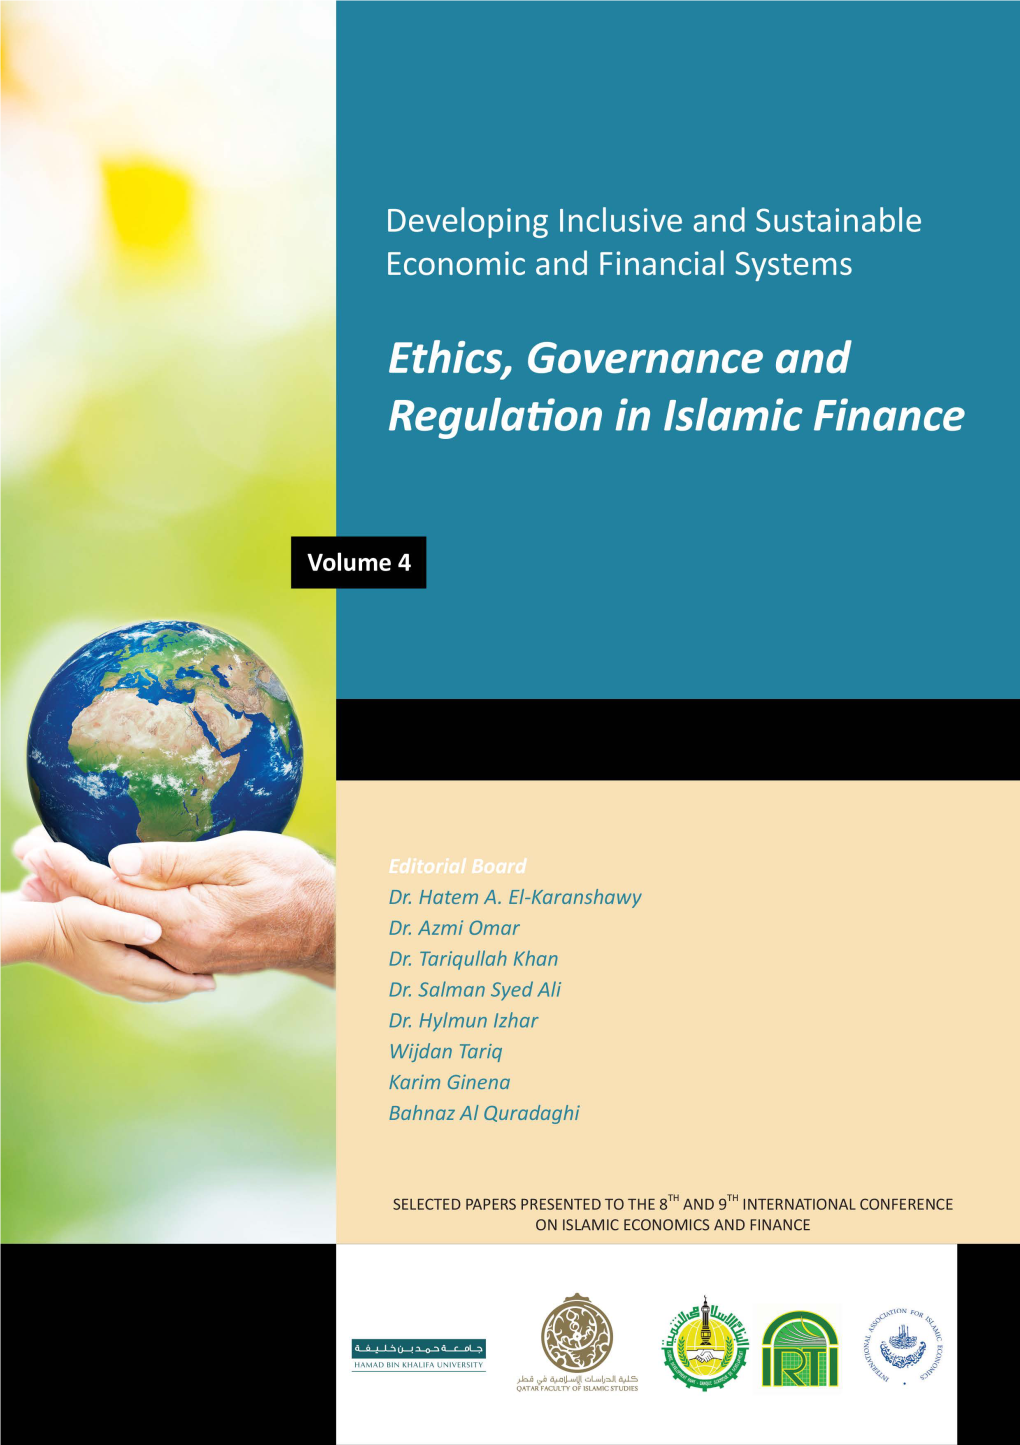 Ethics, Governance and Regulation in Islamic Finance